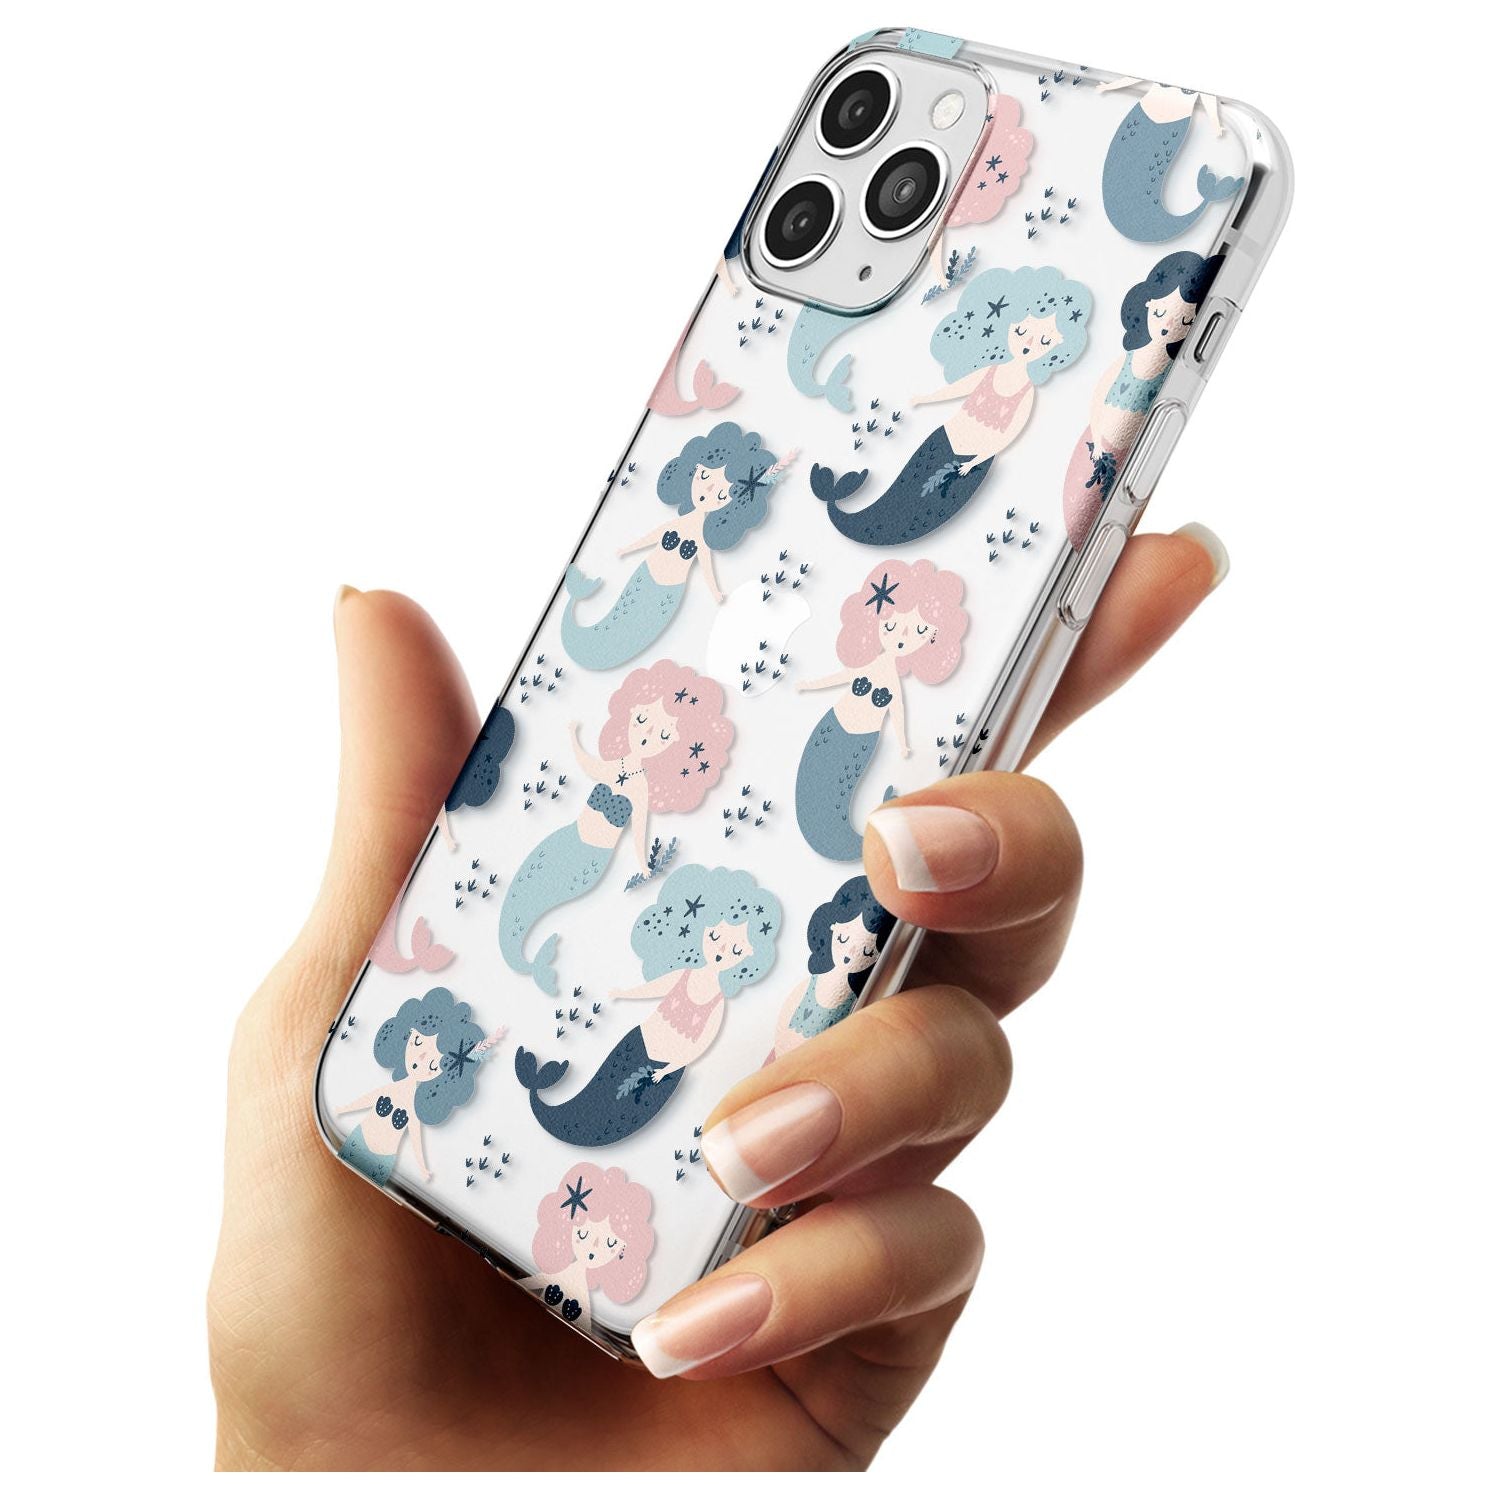 Mermaid Vibes Slim TPU Phone Case for iPhone 11 Pro Max